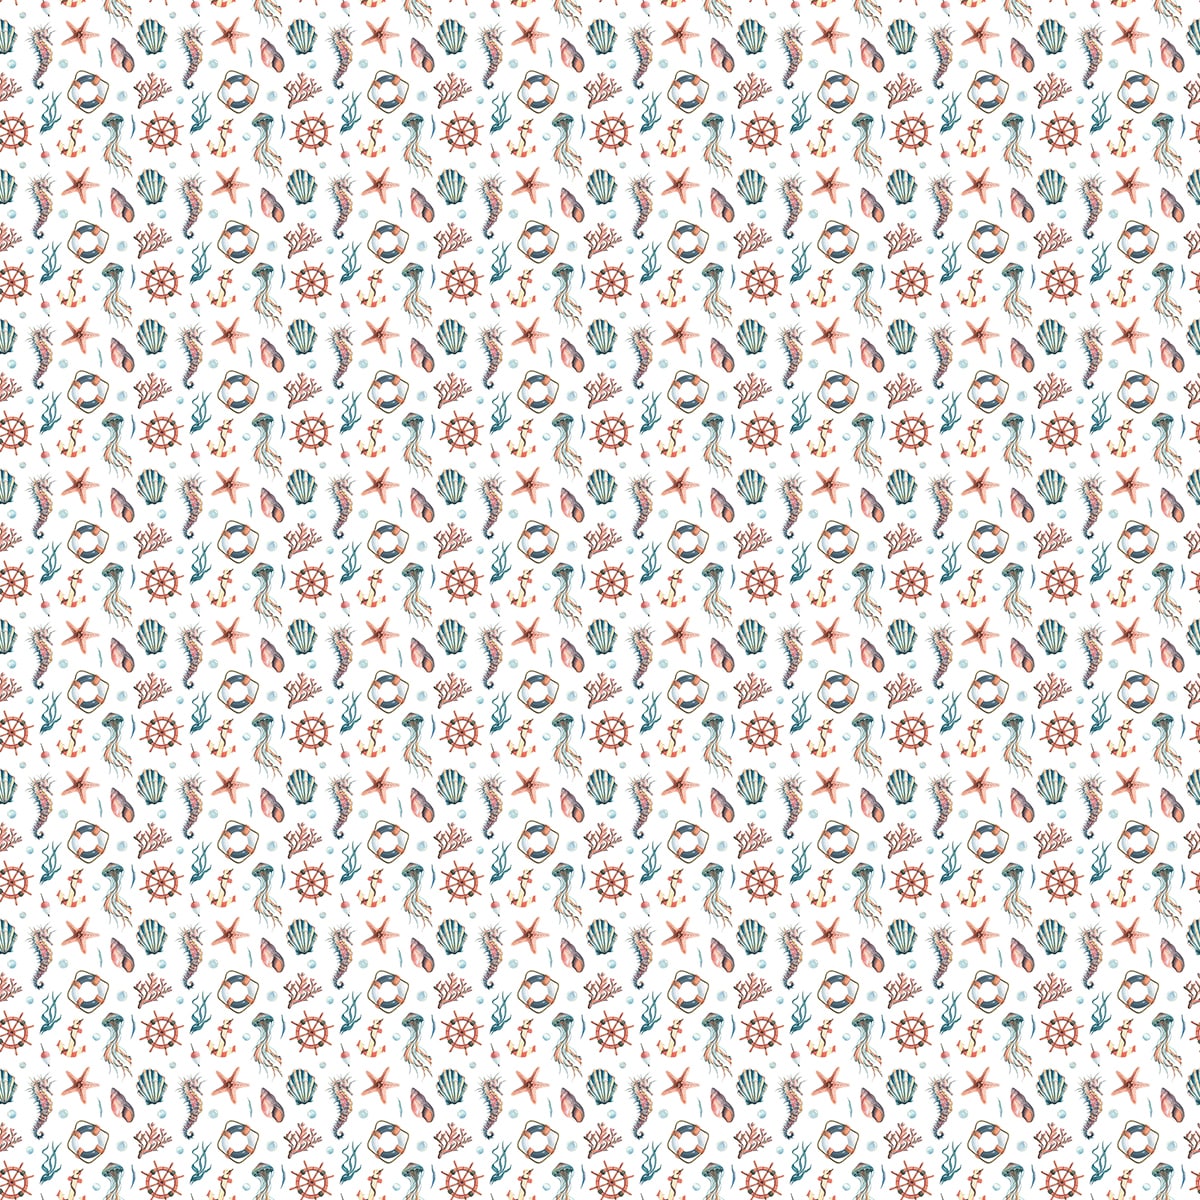 A pattern of sea animals